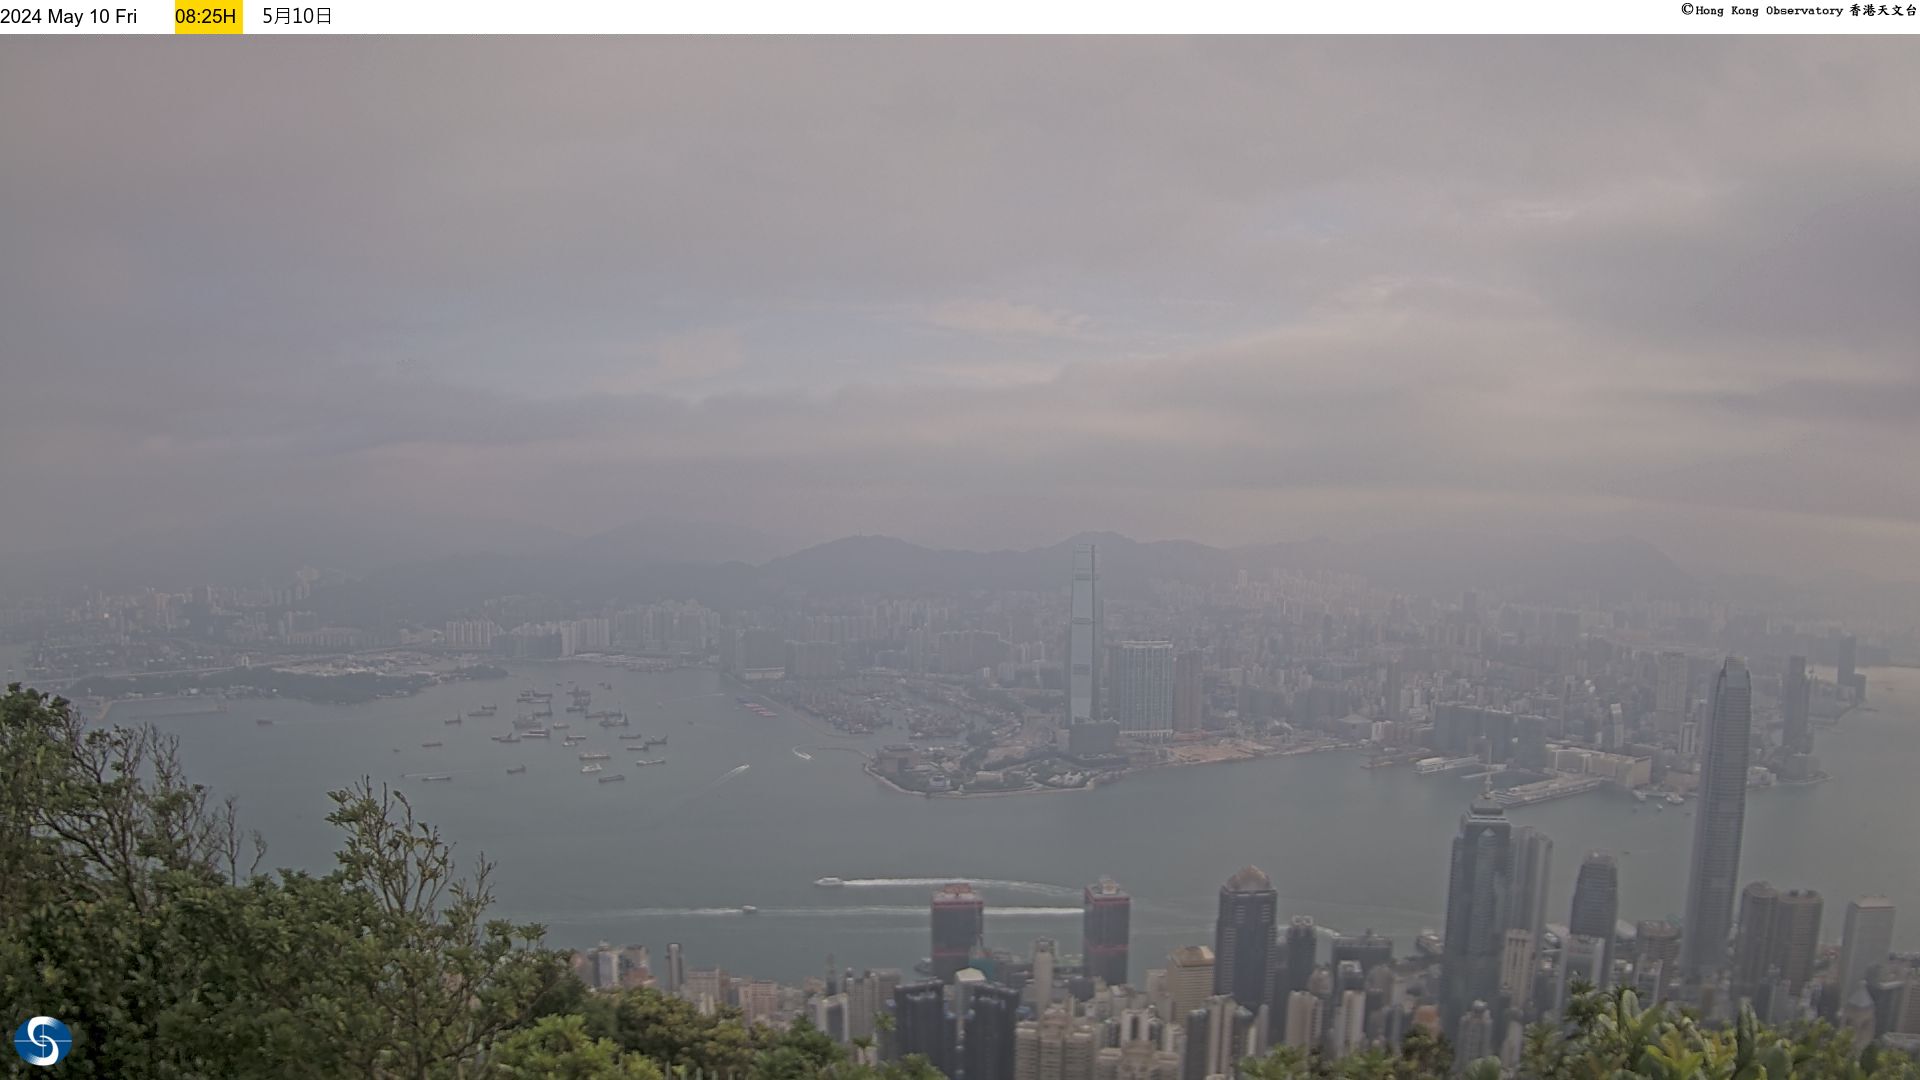 Hong Kong Fr. 08:33